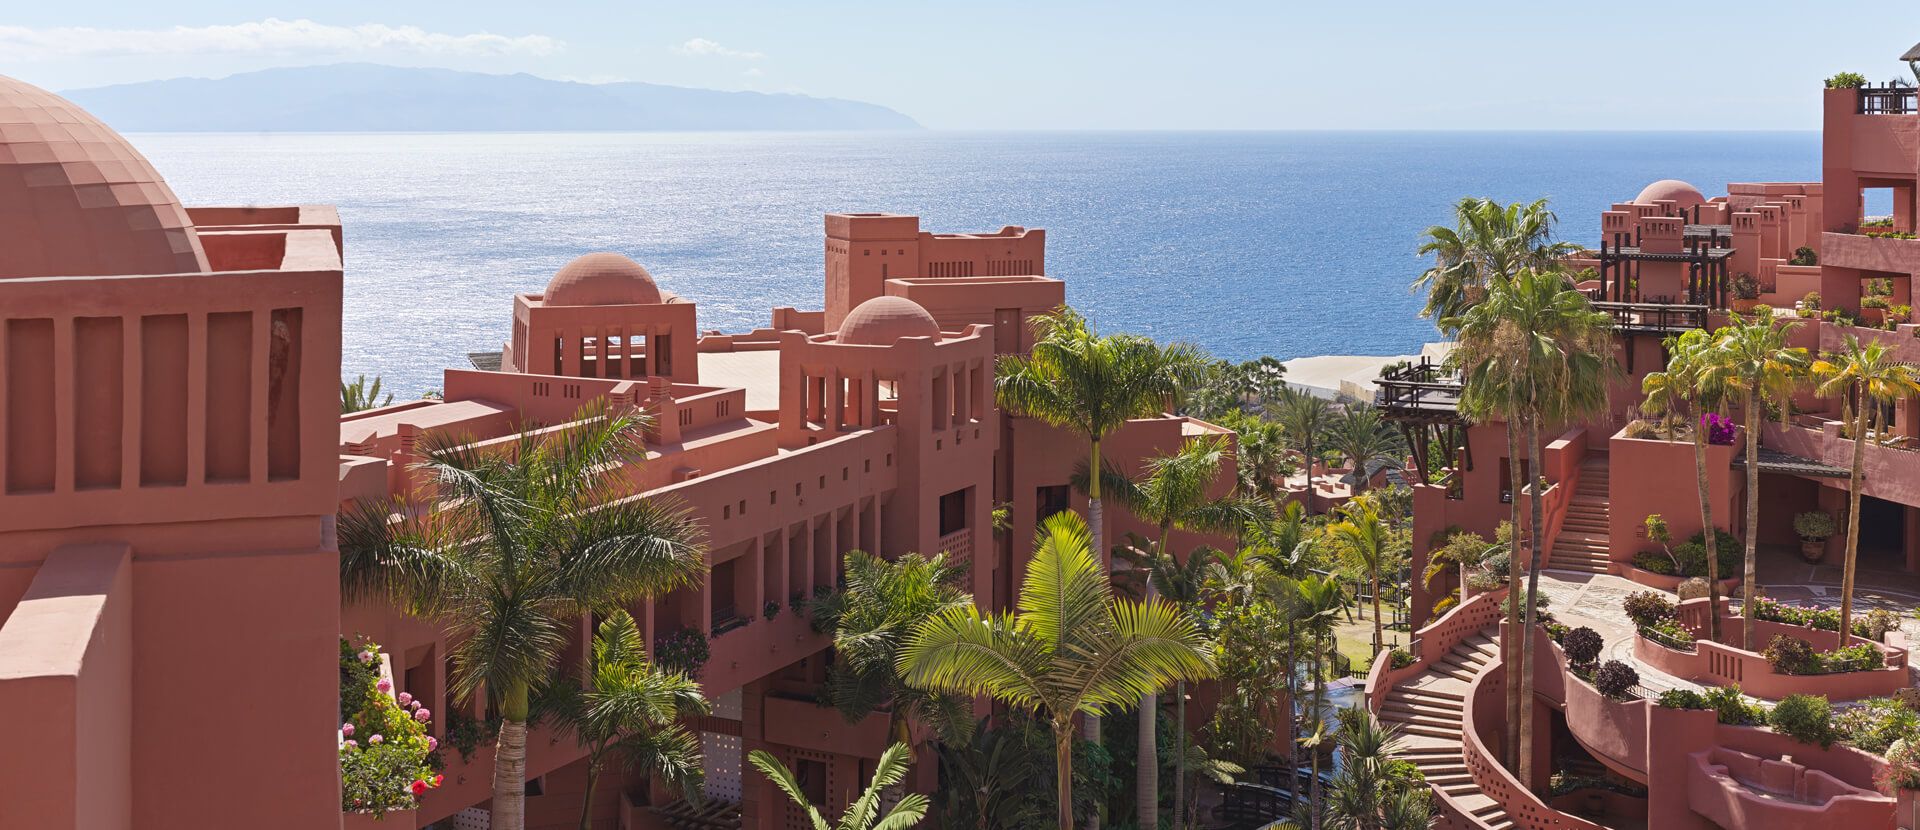 The Ritz-Carlton Tenerife, Abama 